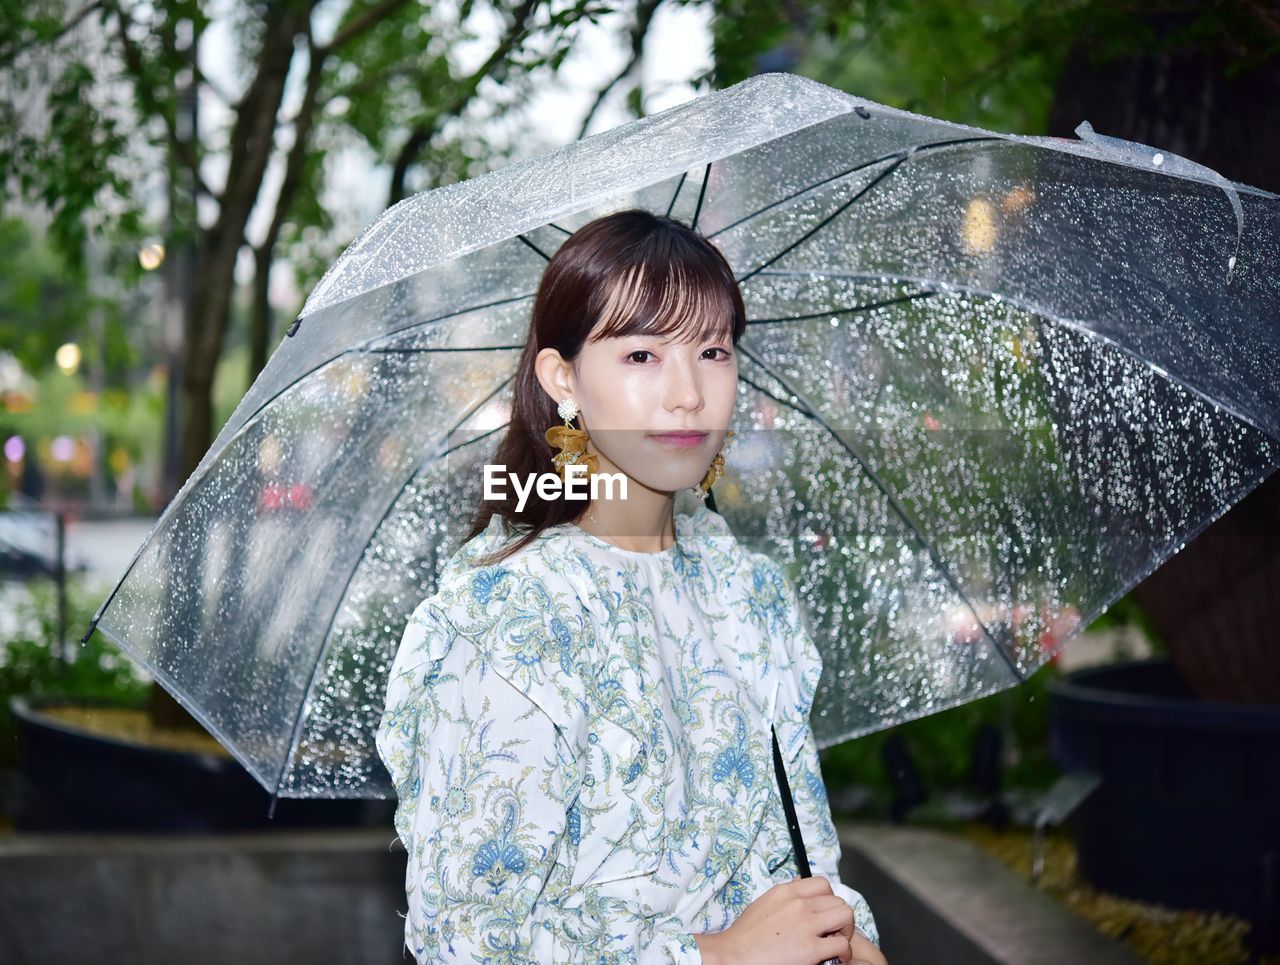 Portrait of woman with umbrella standing in rain during rainy season